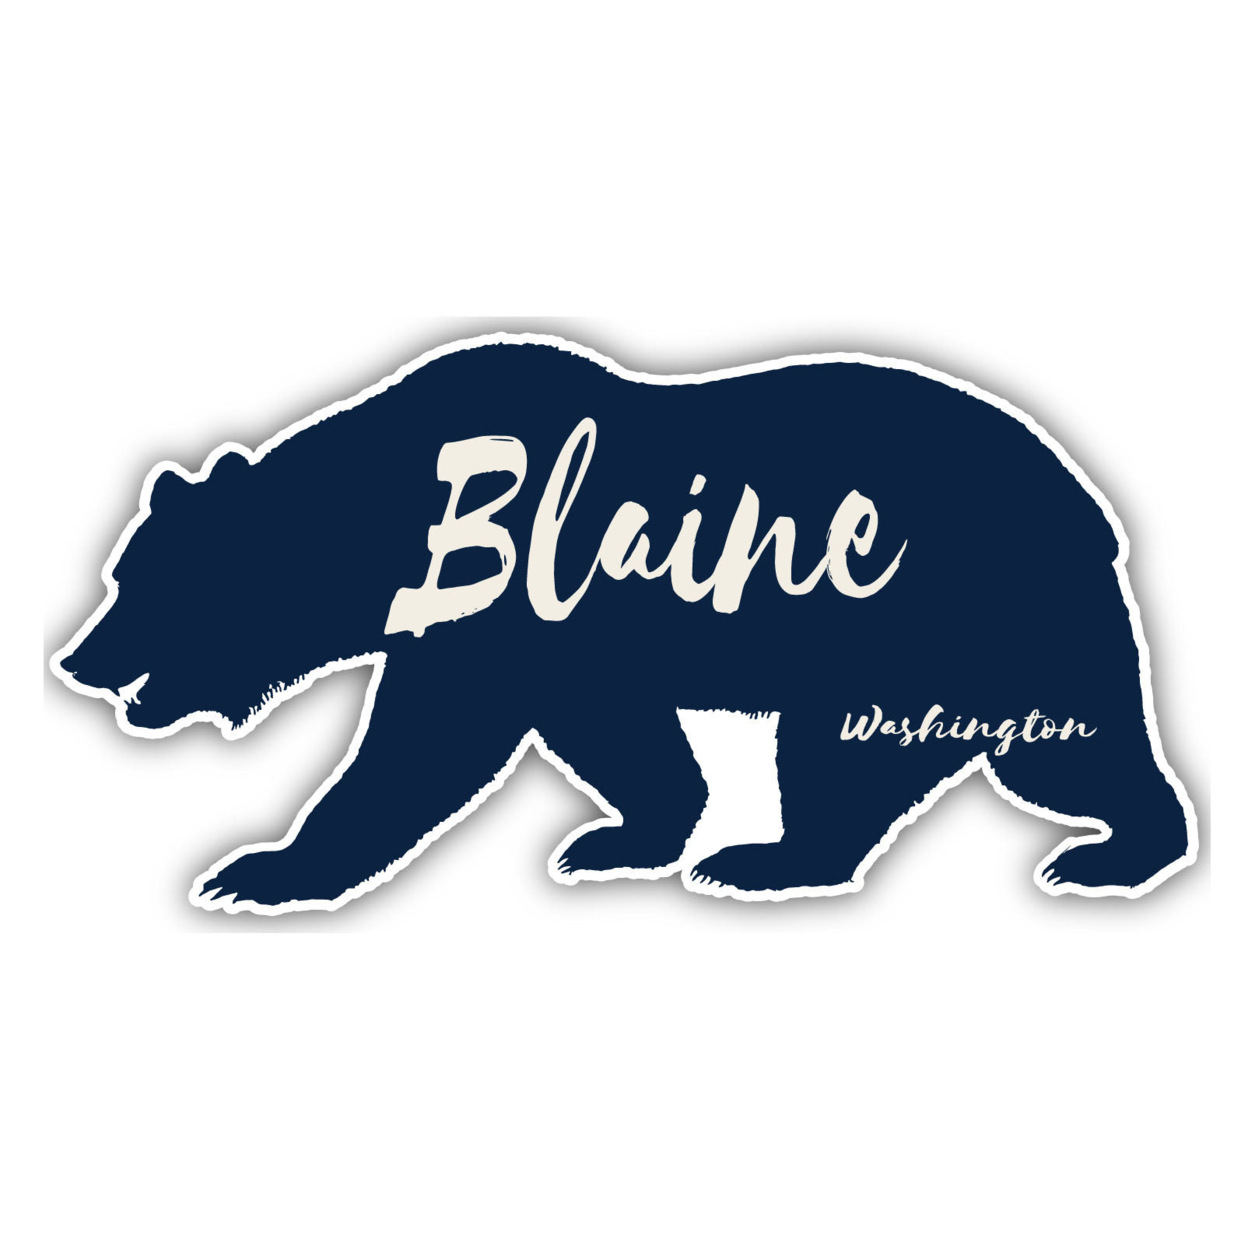 Blaine Washington Souvenir Decorative Stickers (Choose Theme And Size) - Single Unit, 6-Inch, Adventures Awaits